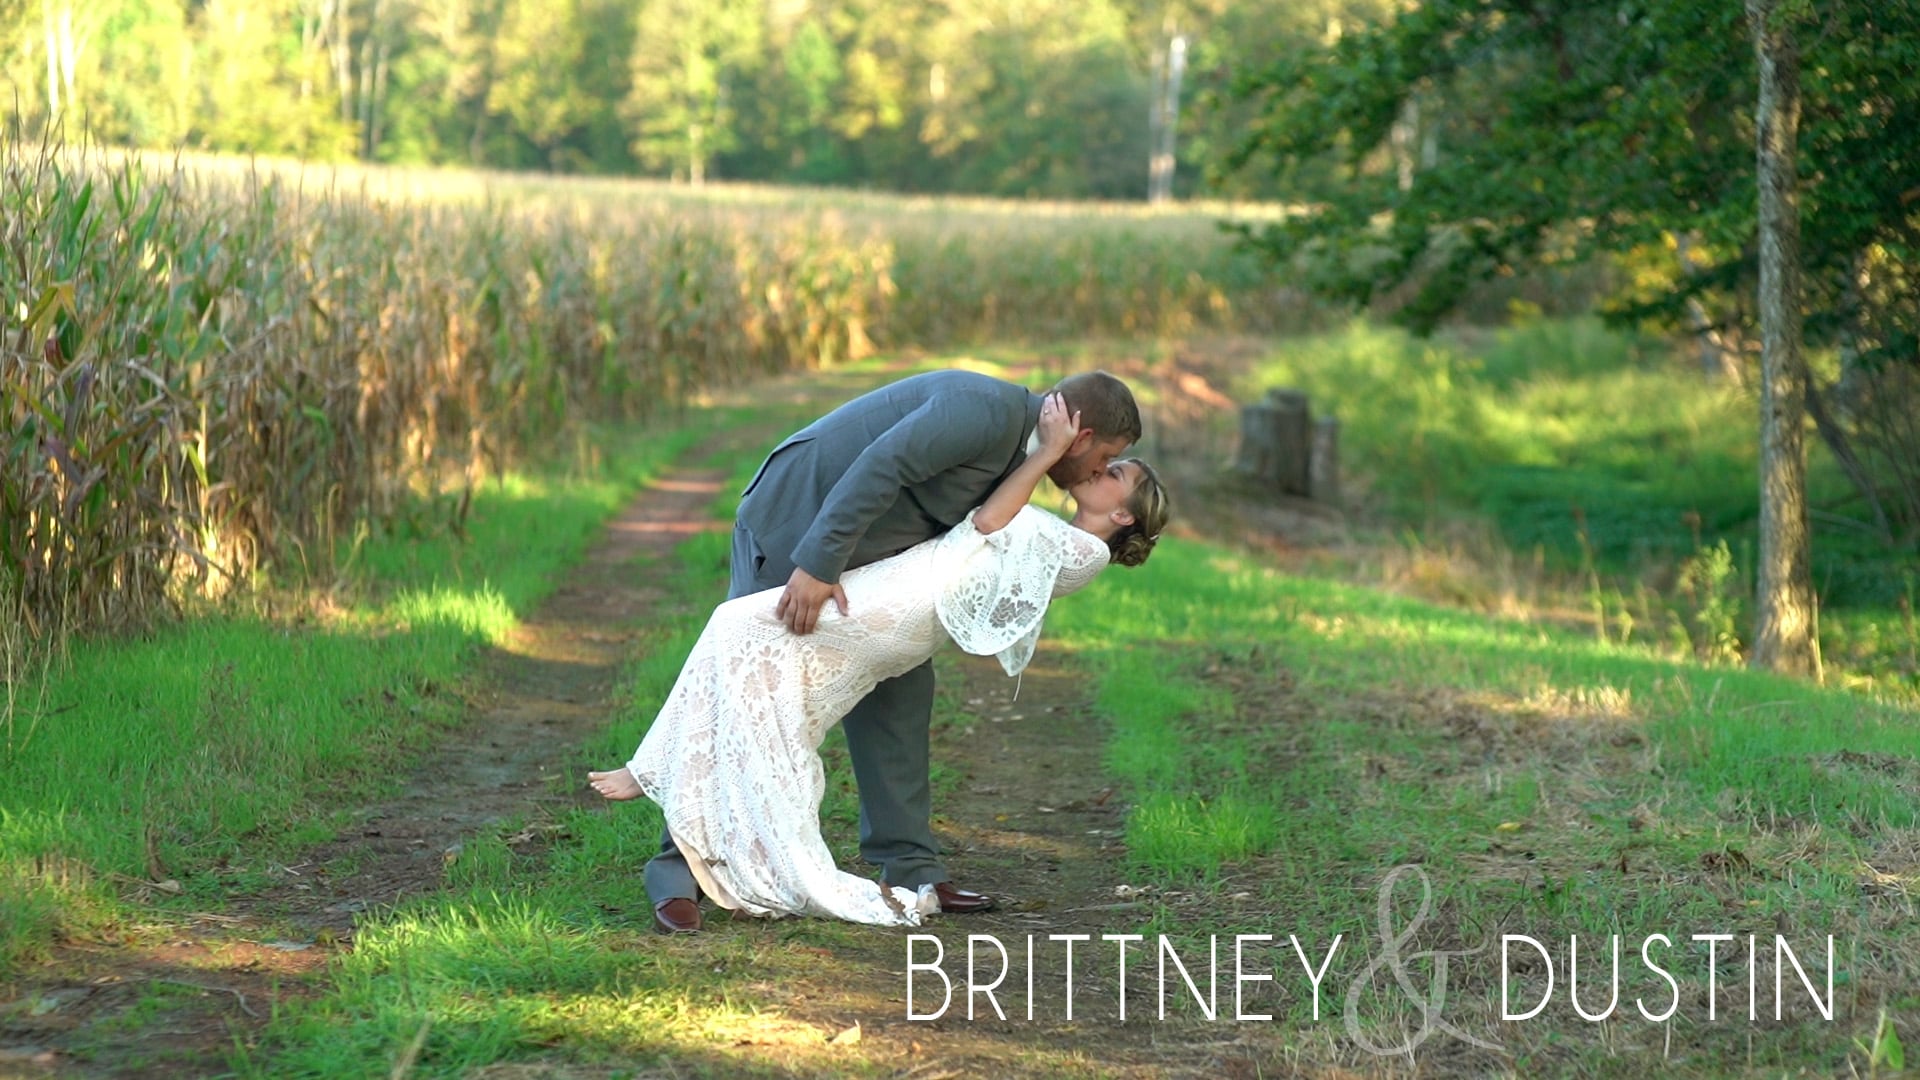 Brittney + Dustin | Highlight Reel